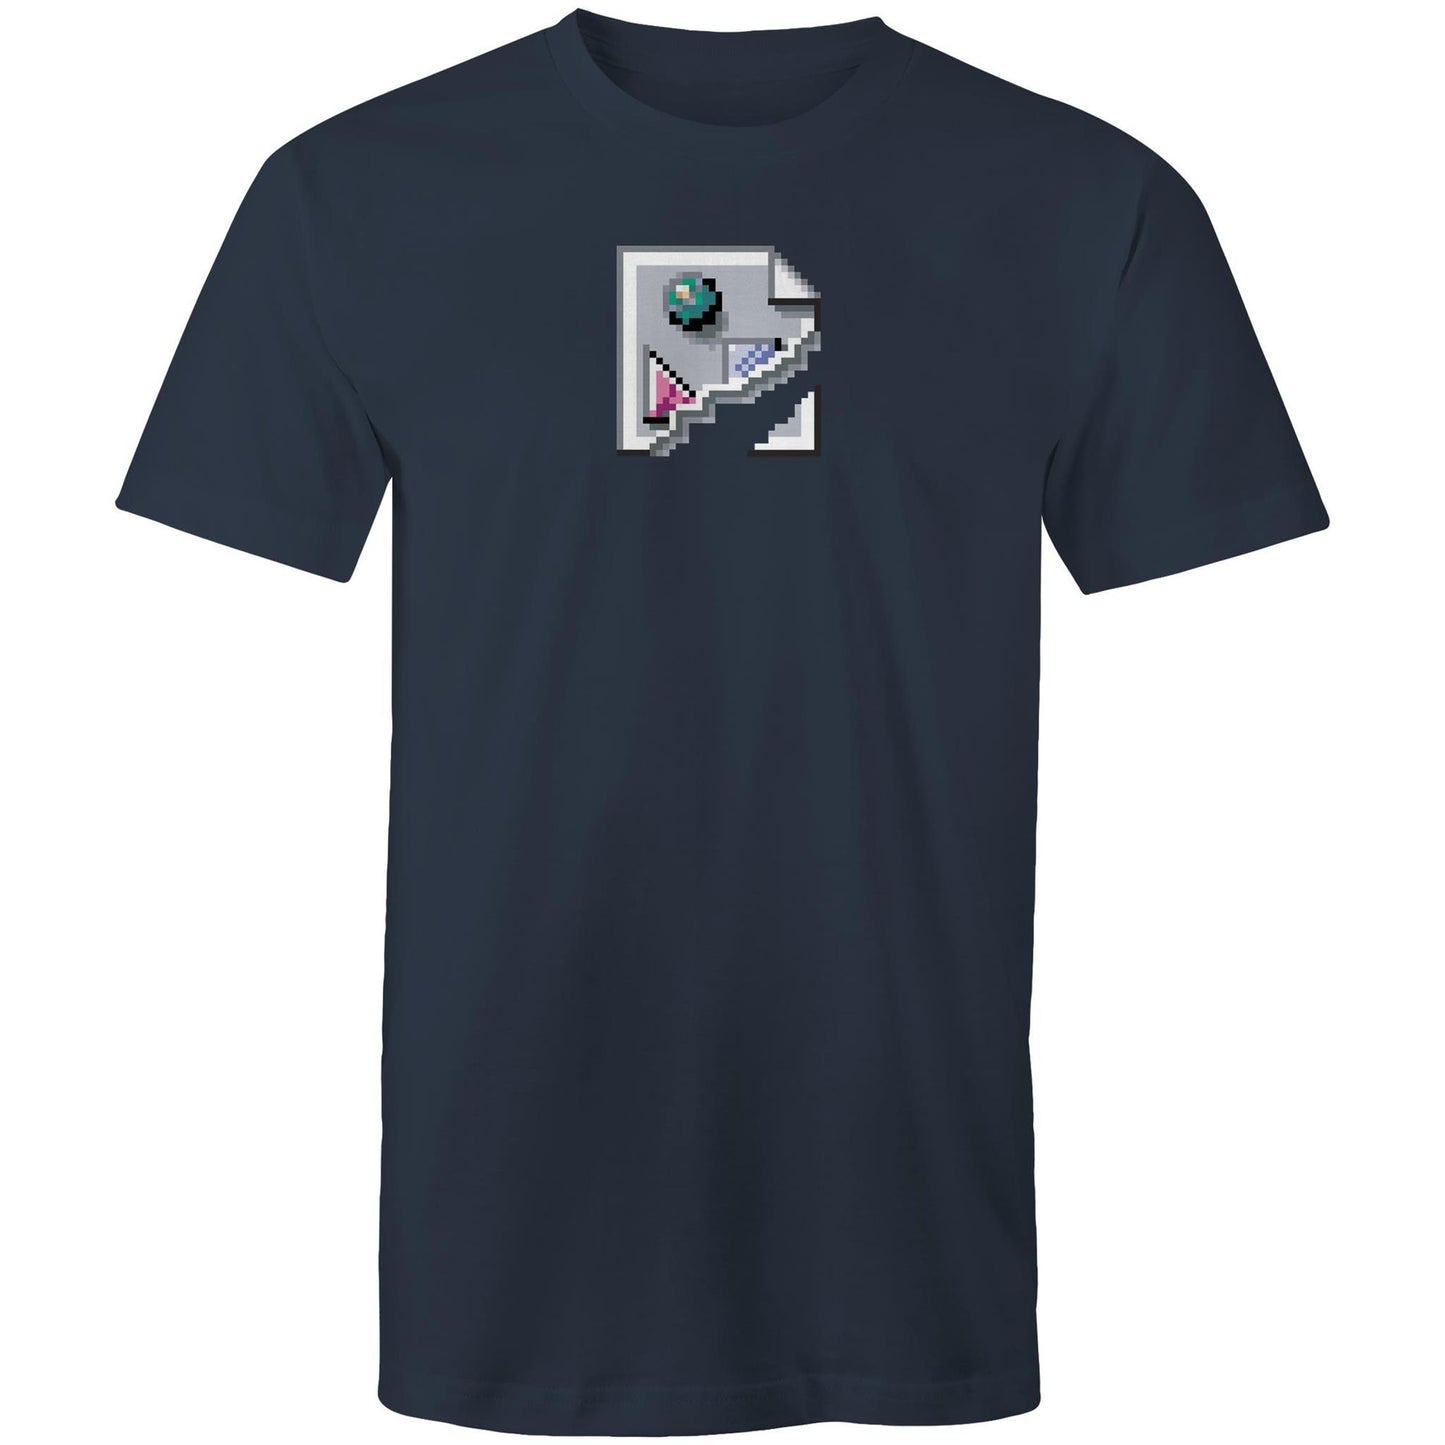 Broken Image T Shirts for Men (Unisex)